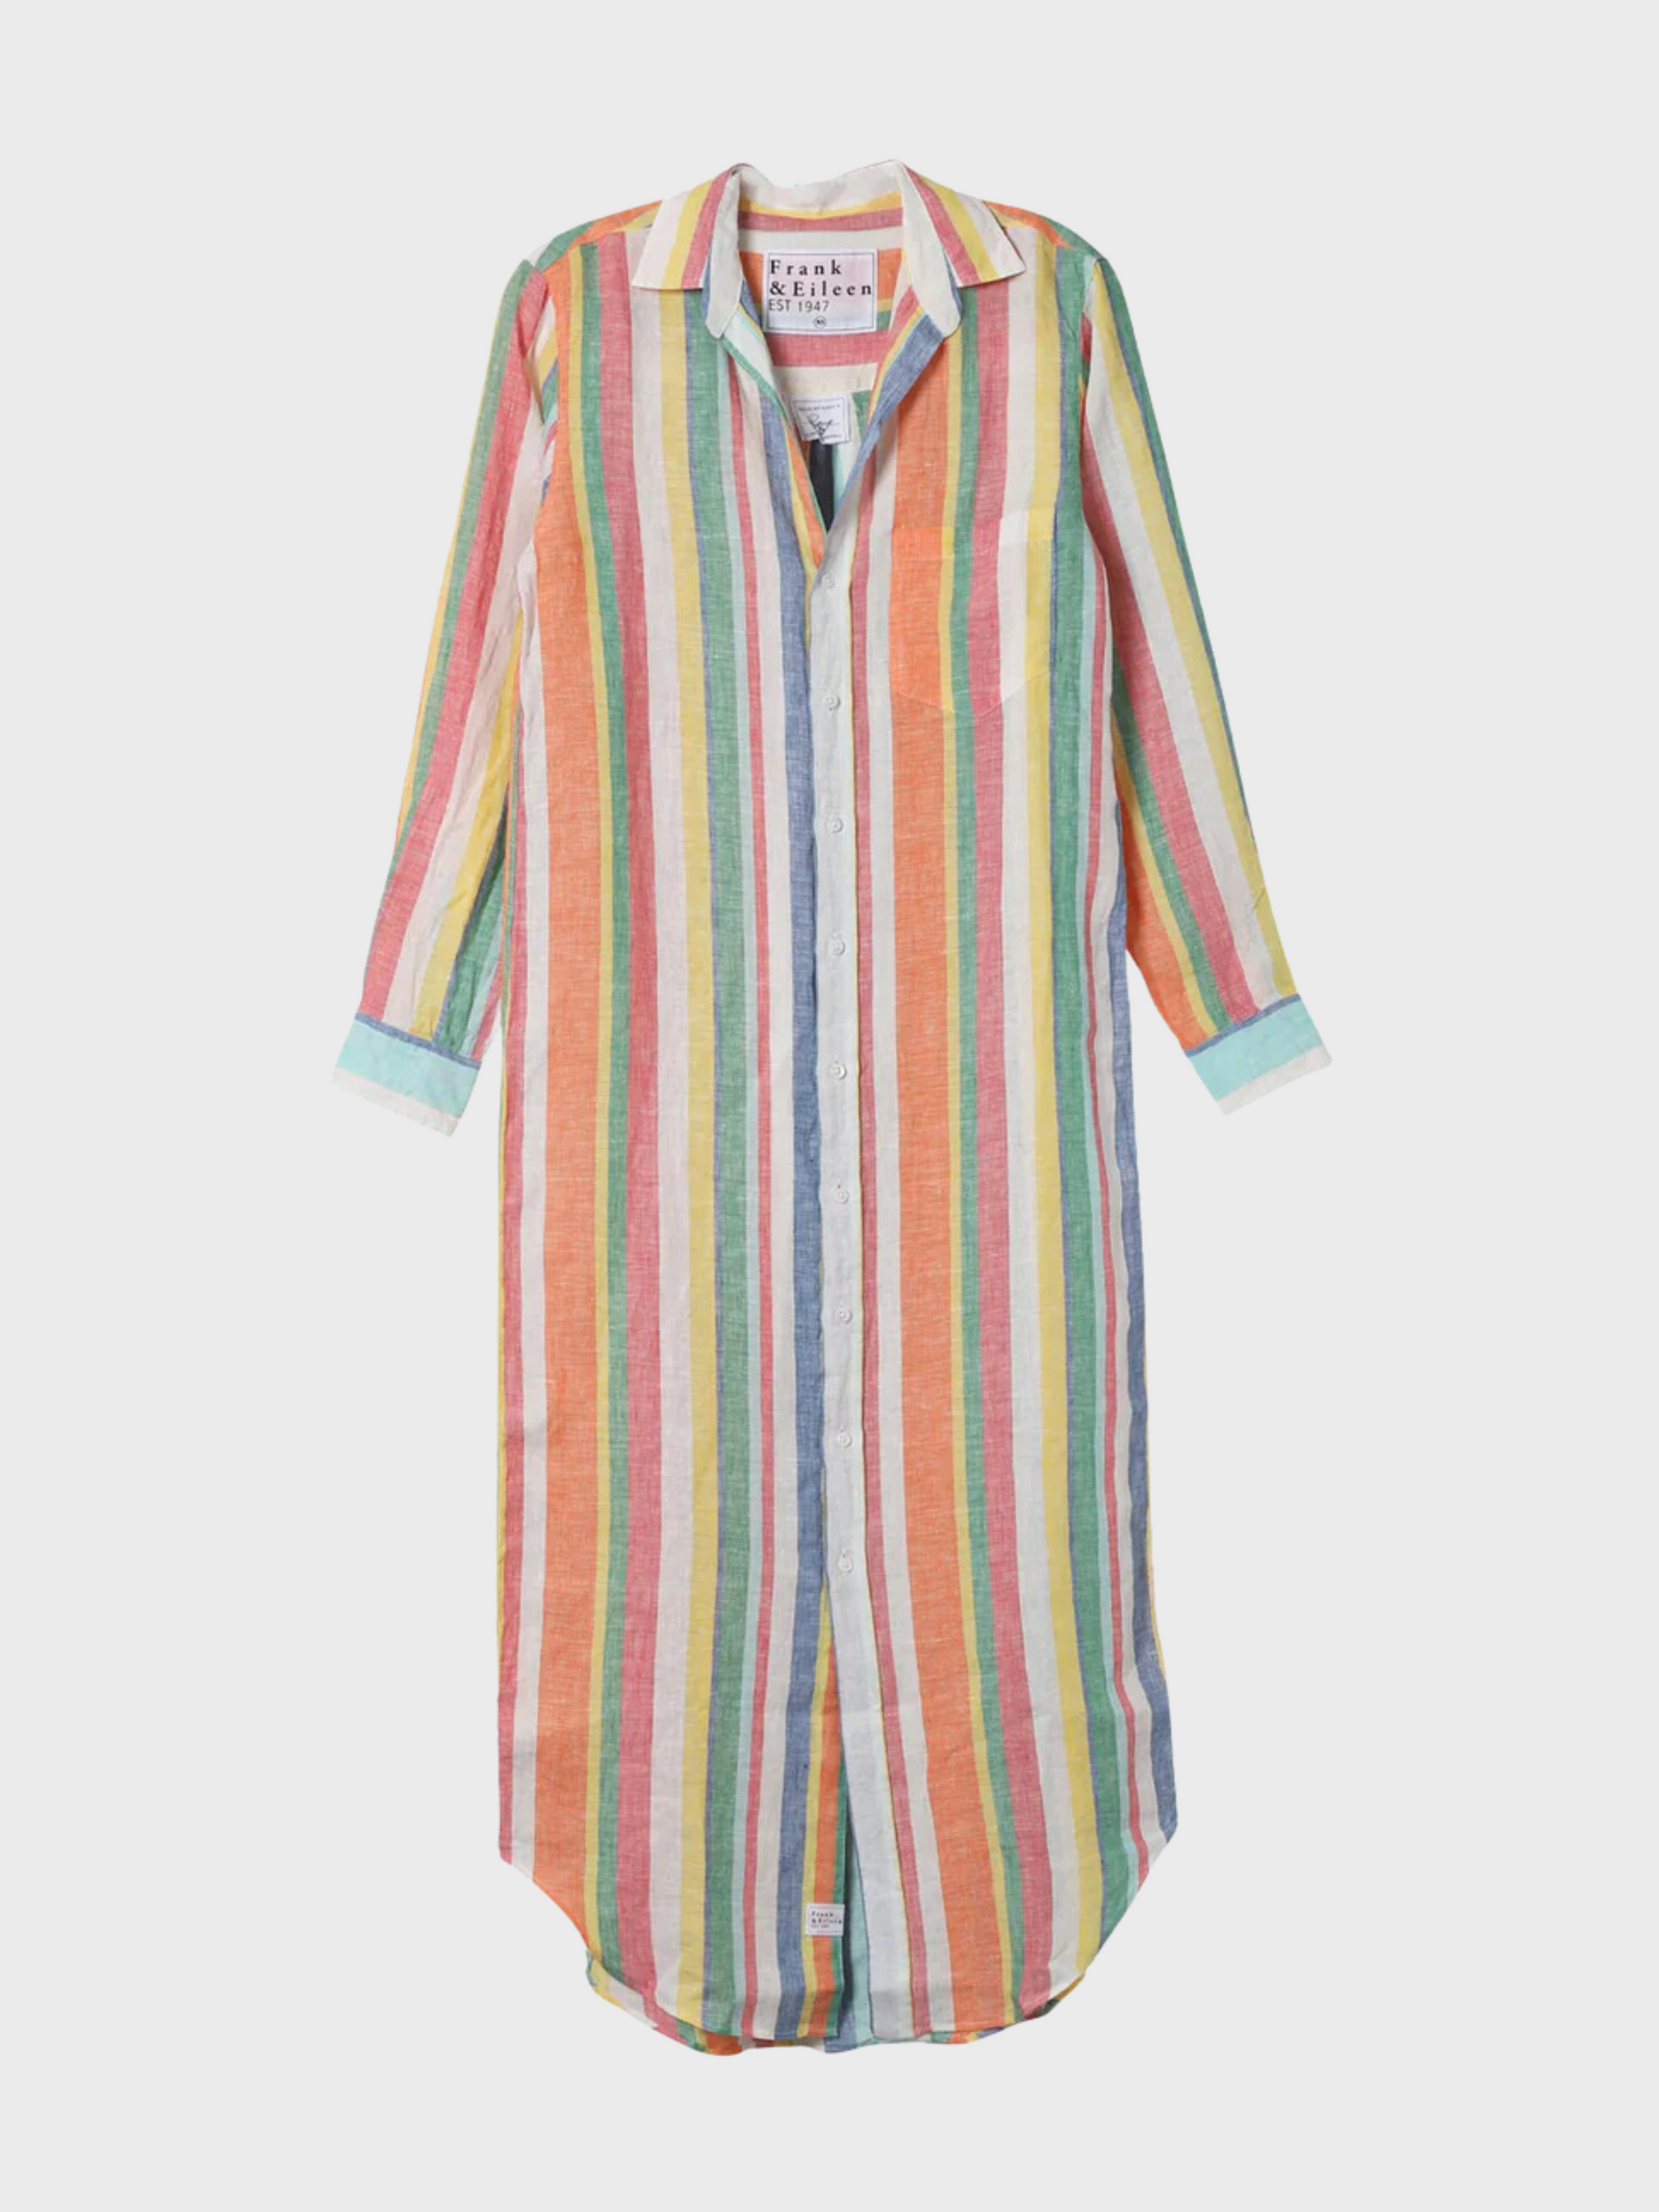 Frank & Eileen Rory Maxi Shirtdress Multi Colour Stripe Linen-Dresses-XXS-West of Woodward Boutique-Vancouver-Canada